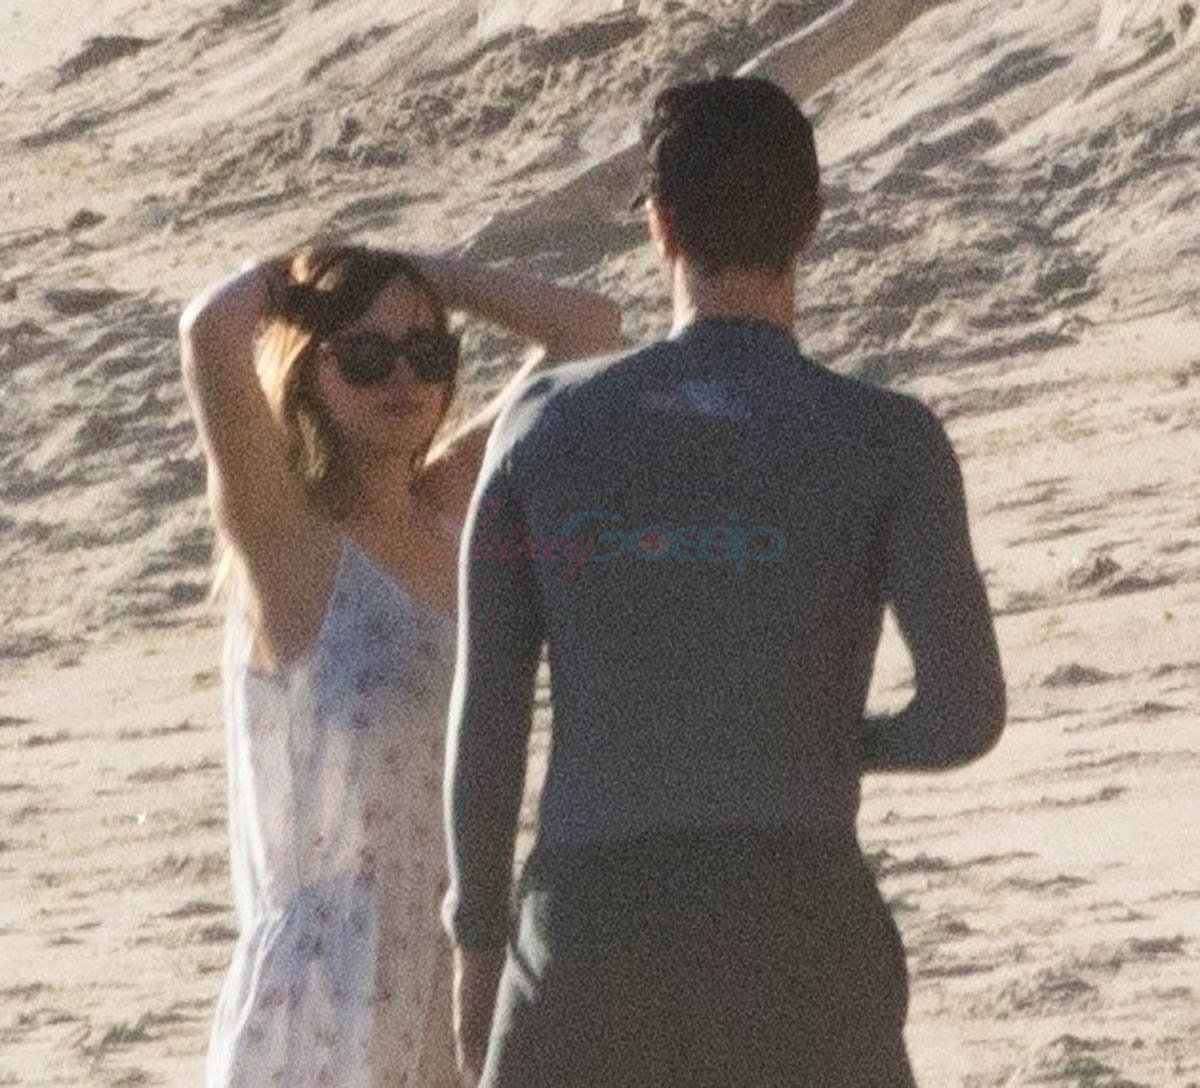 Dakota Johnson and Chris Martin on the beach together in Malibu